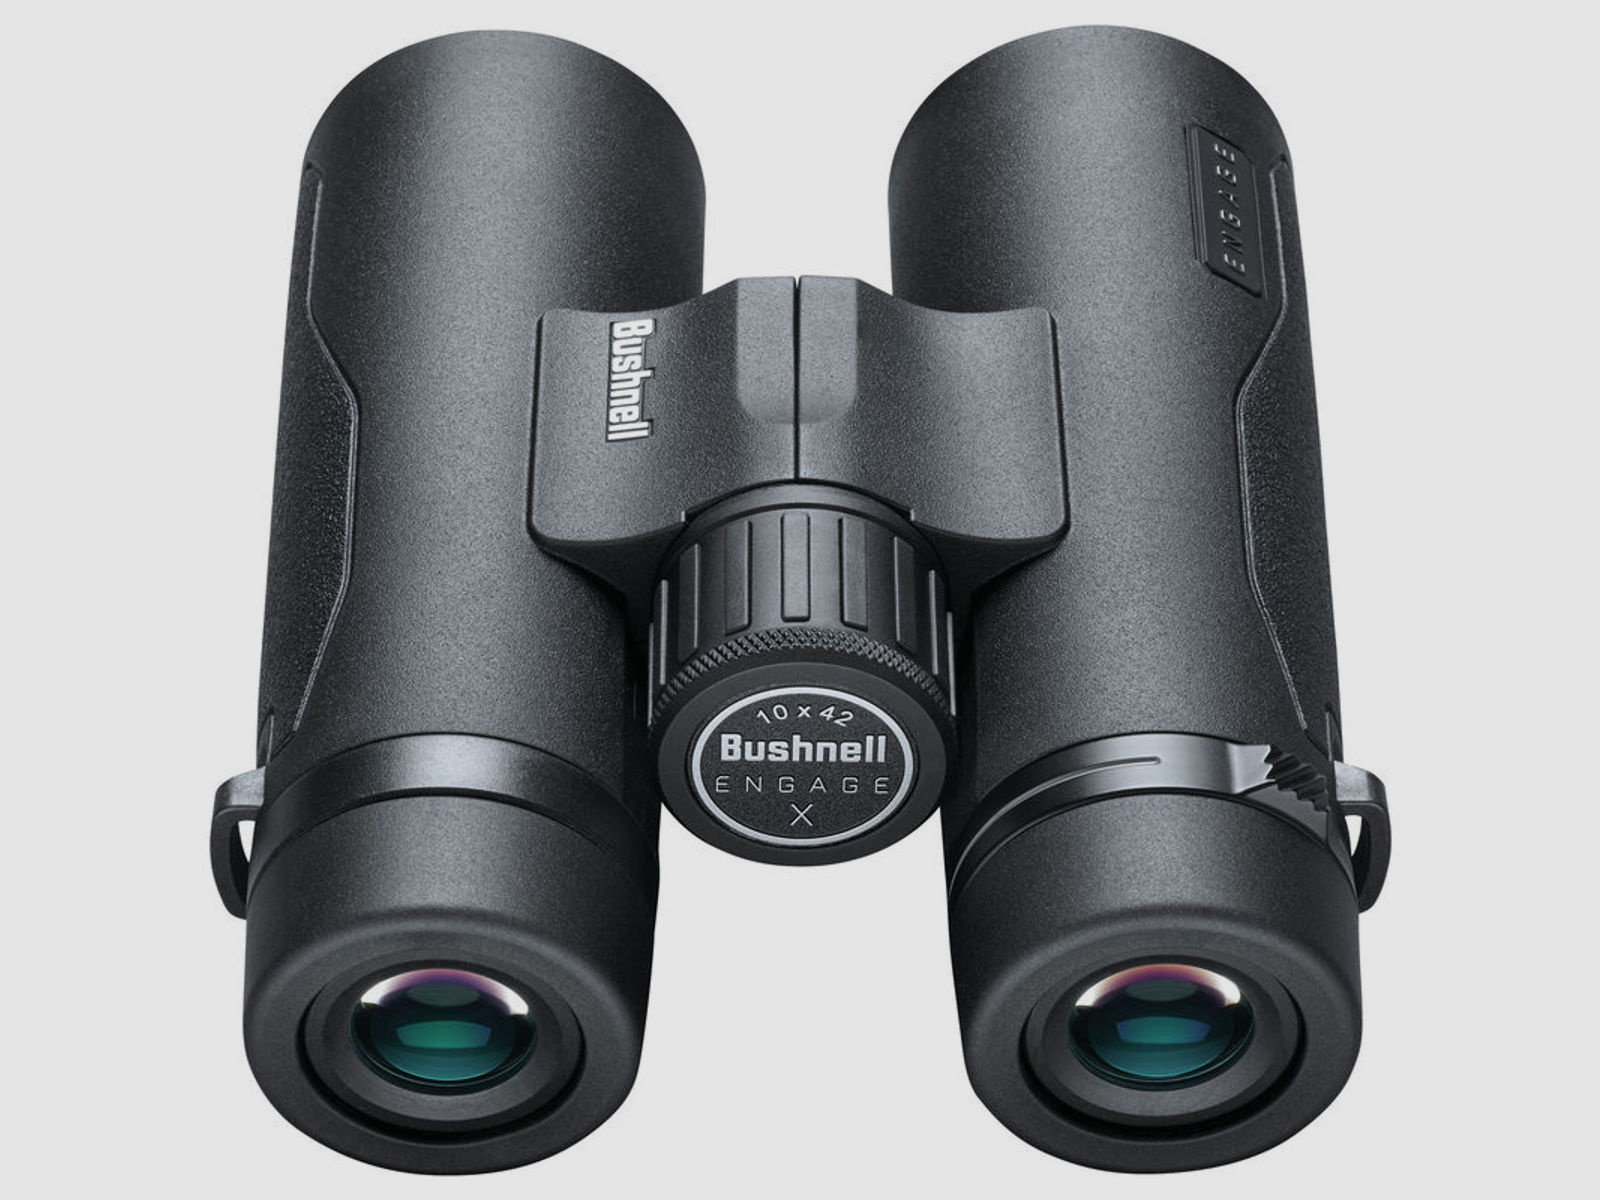 Bushnell Fernglas Engage 'X' 10x42mm, schwarz, EDX, FMC, bleifrei